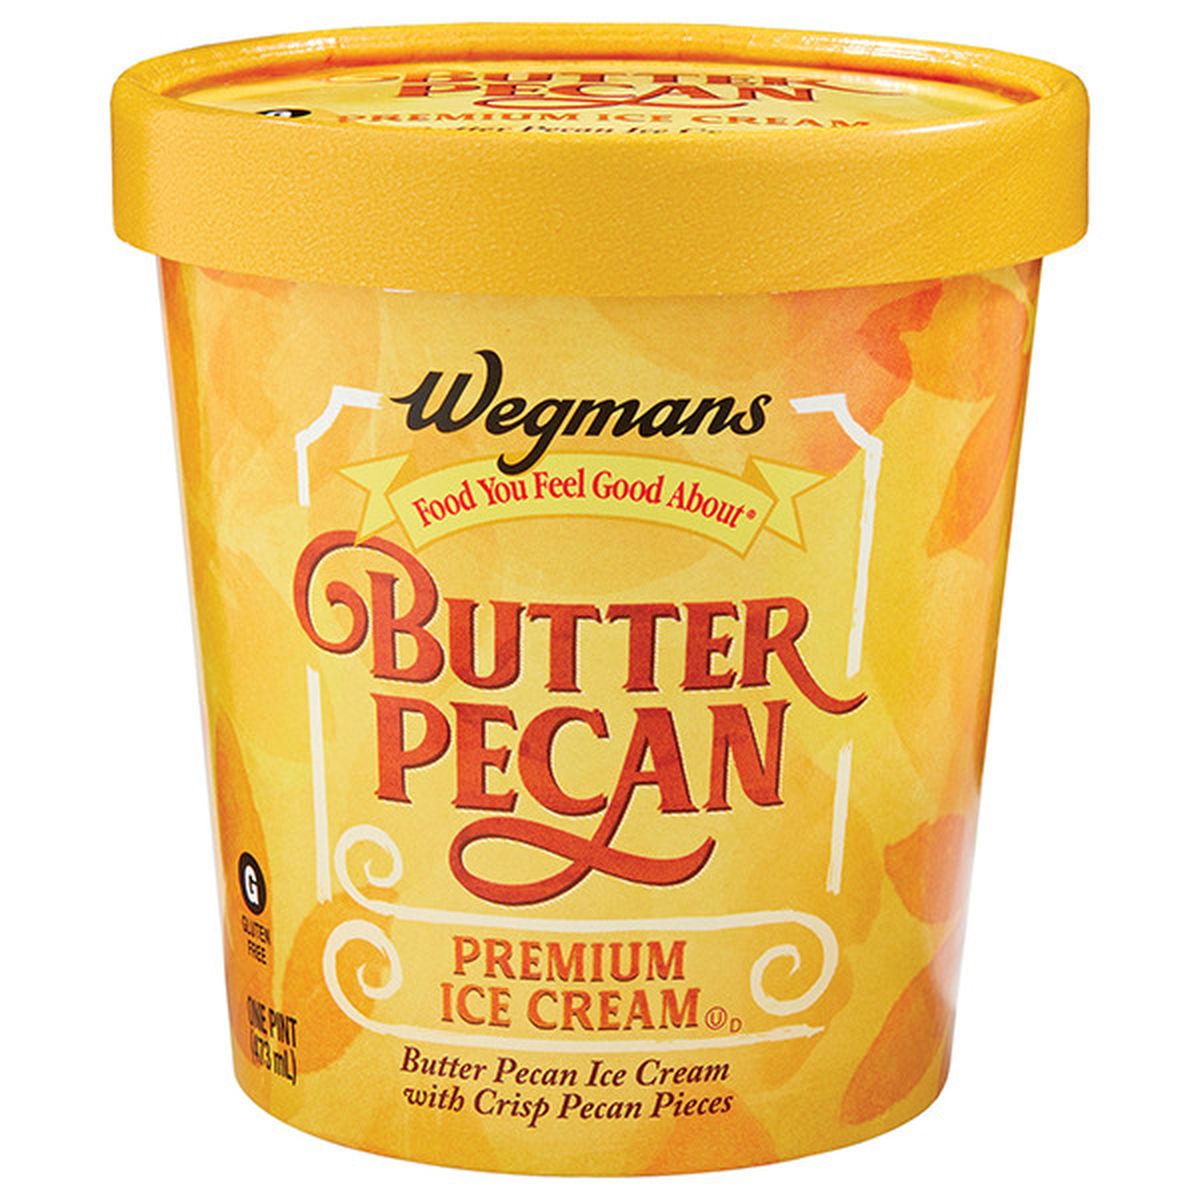 Calories in Wegmans Butter Pecan Premium Ice Cream